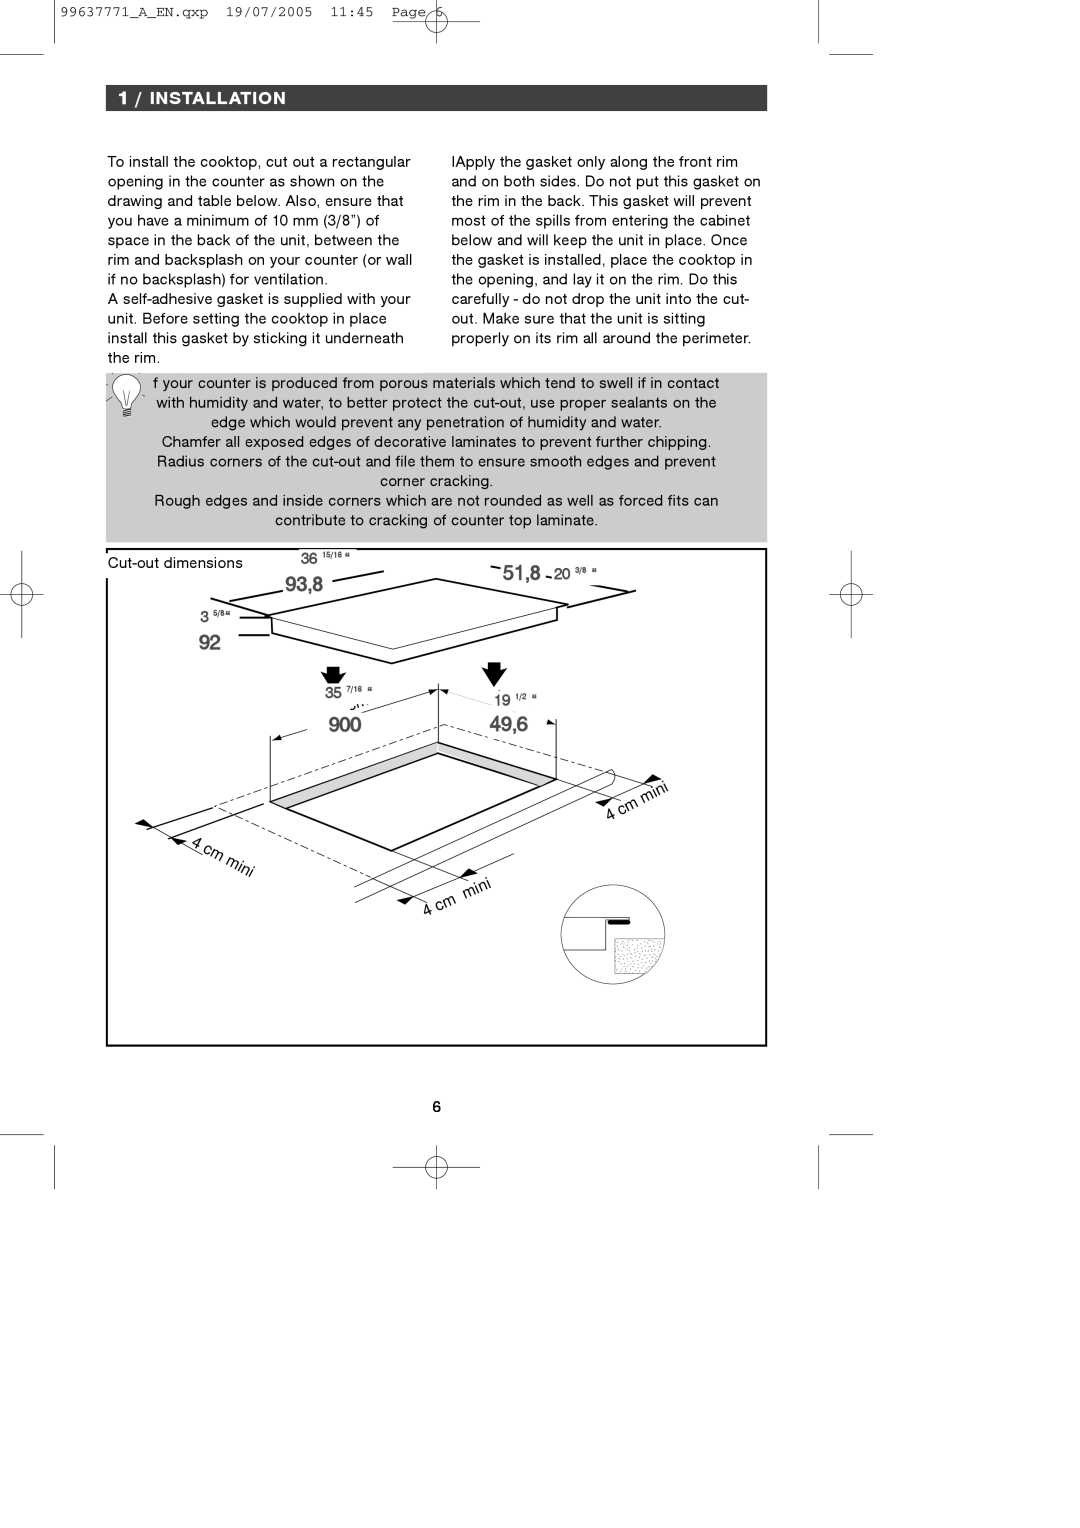 Kuppersbusch USA EKI956UL manual 51,8, 93,8, 49,6, mini, 1 / INSTALLATION, Cut-out dimensions, 20 3/8, 3 5/8“, 19 1/2 